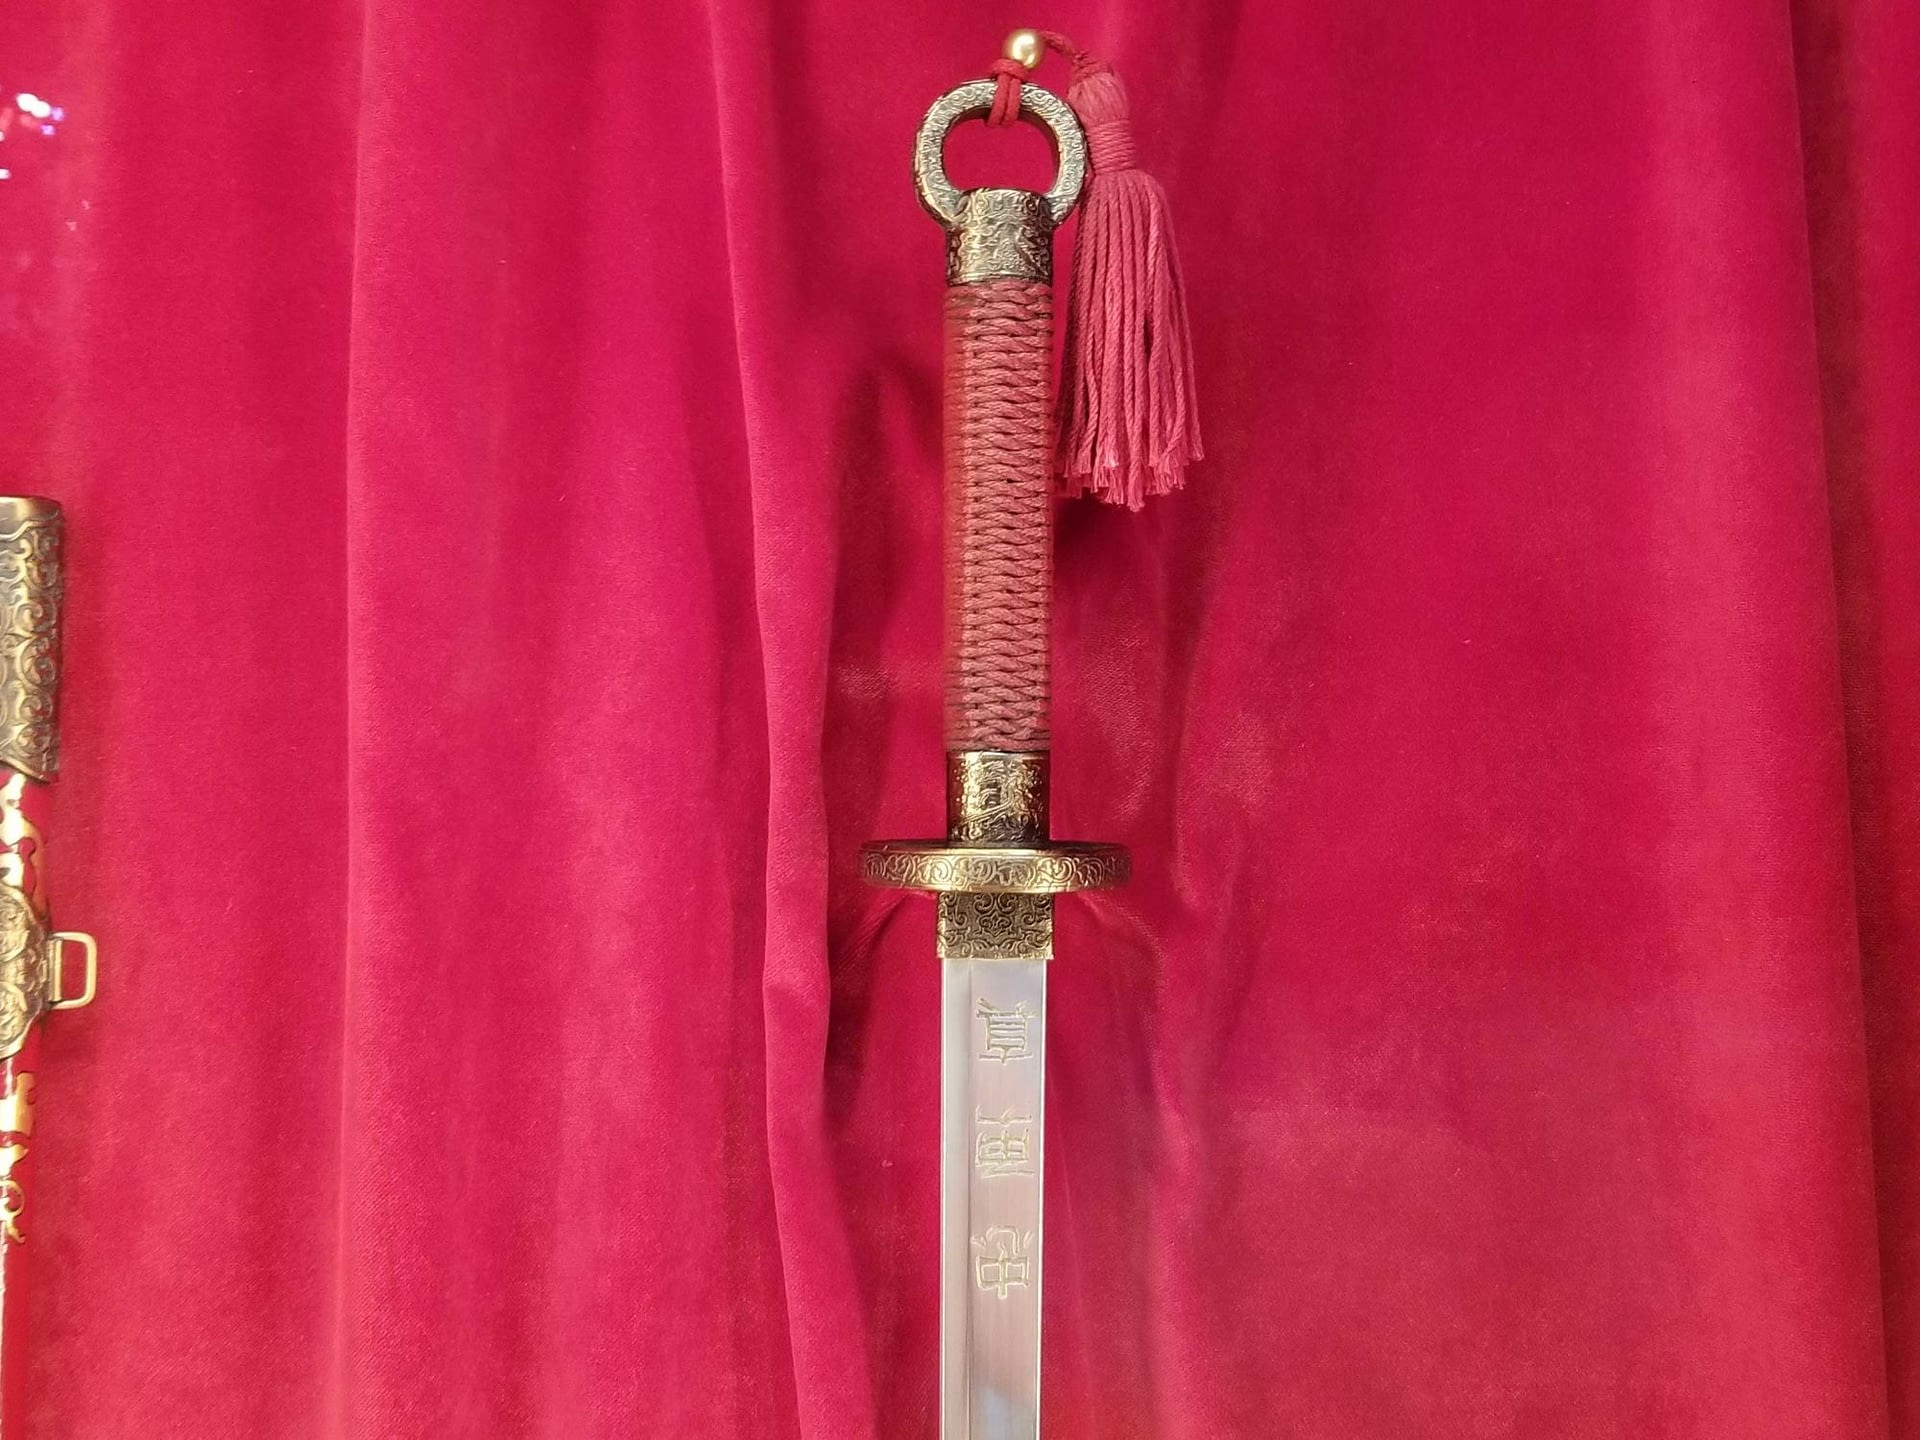 mulan rise of a warrior sword